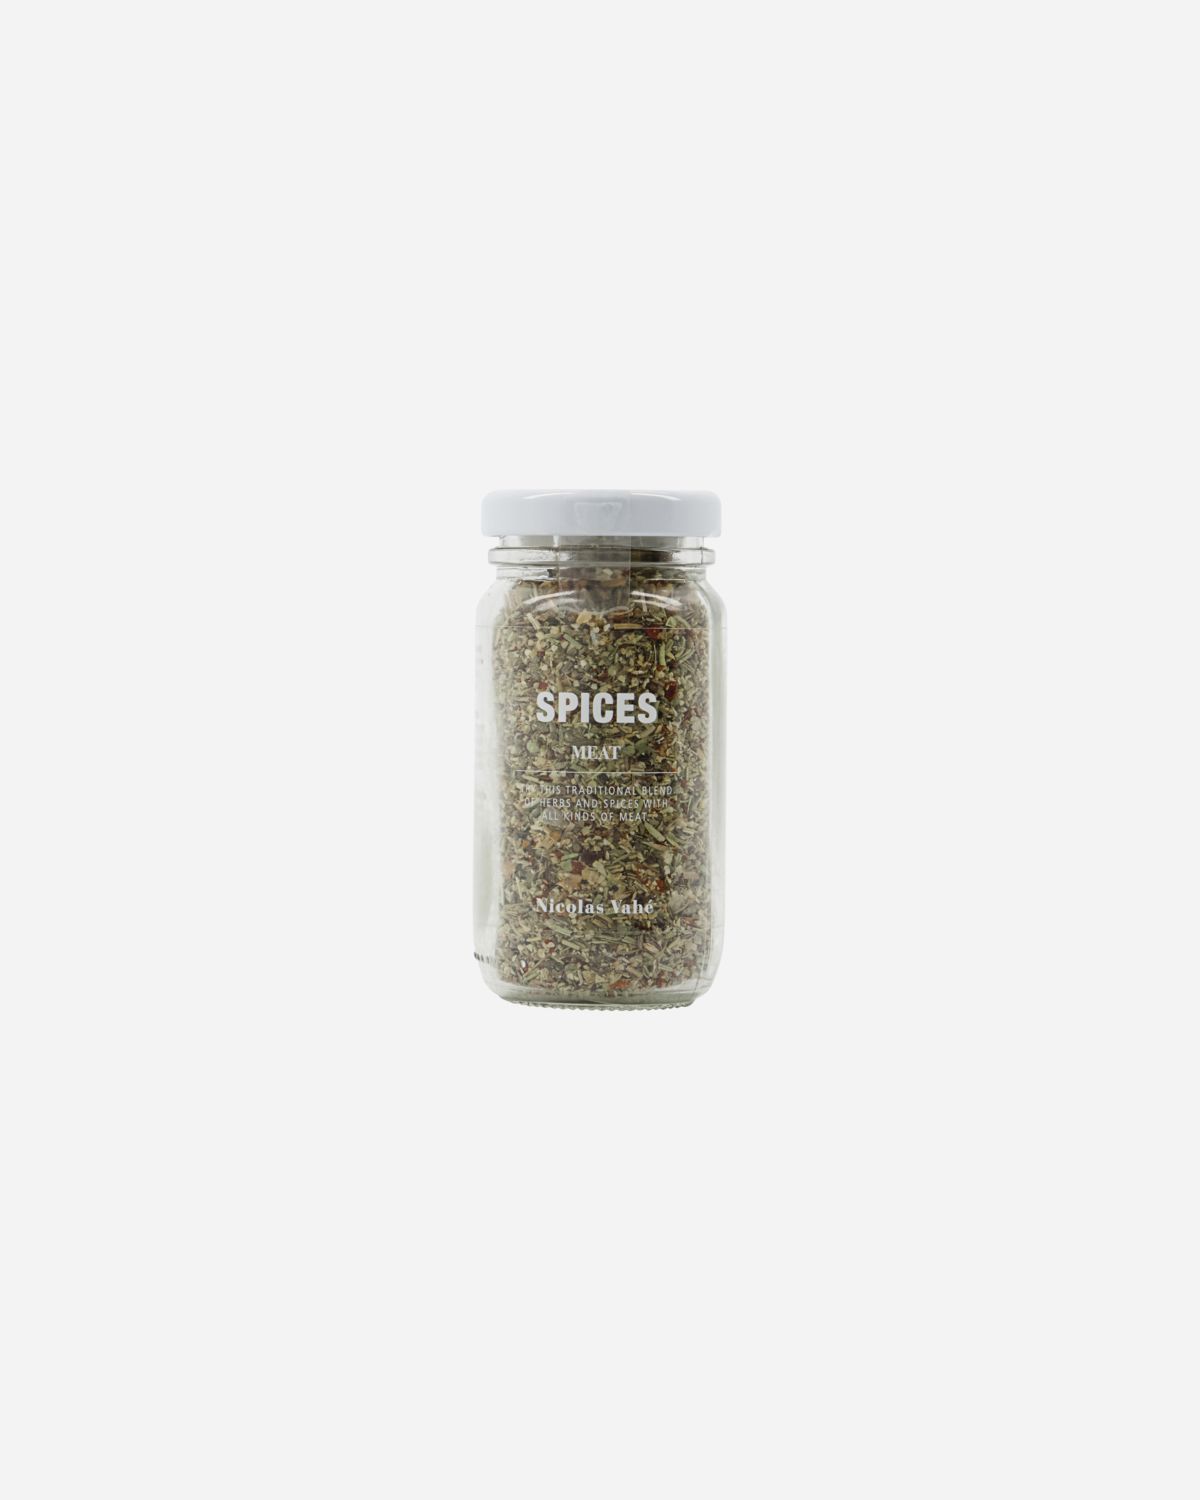 Spices, Rosemary, basil & thyme, 1.2 oz (35g)